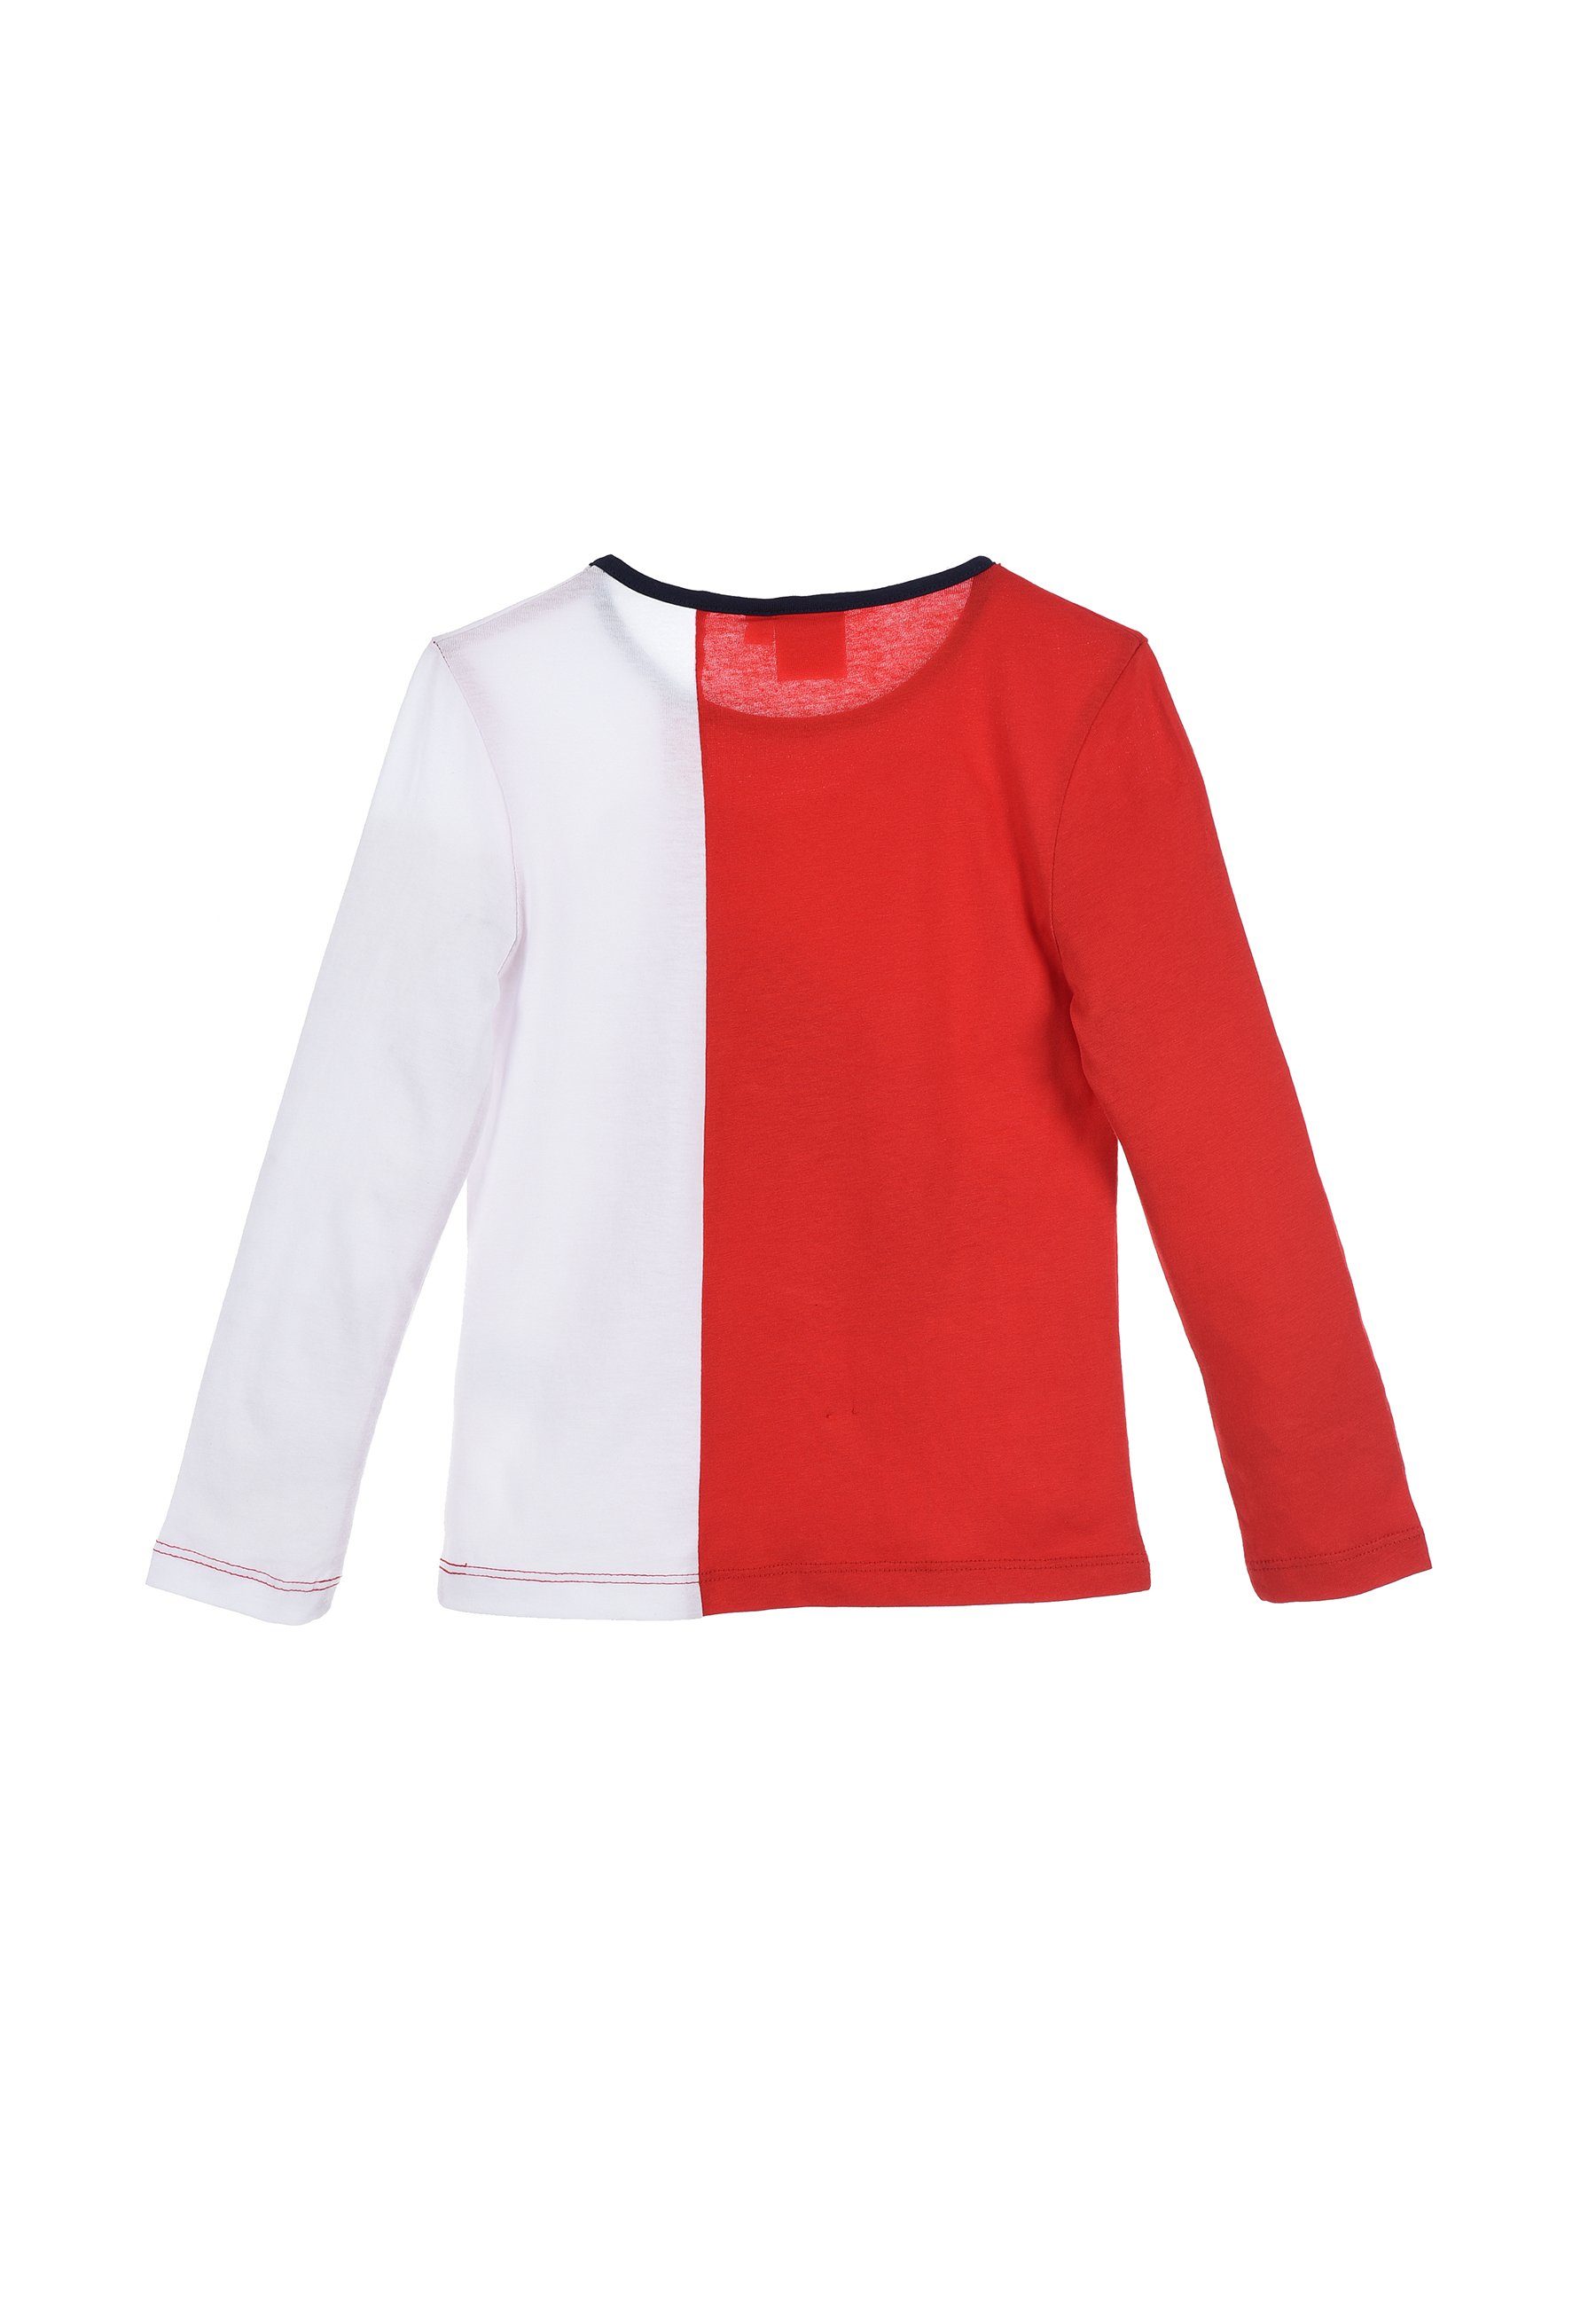 Shirt Oberteil Langarmshirt Ladybug Kinder - Mädchen Rot Miraculous Langarm